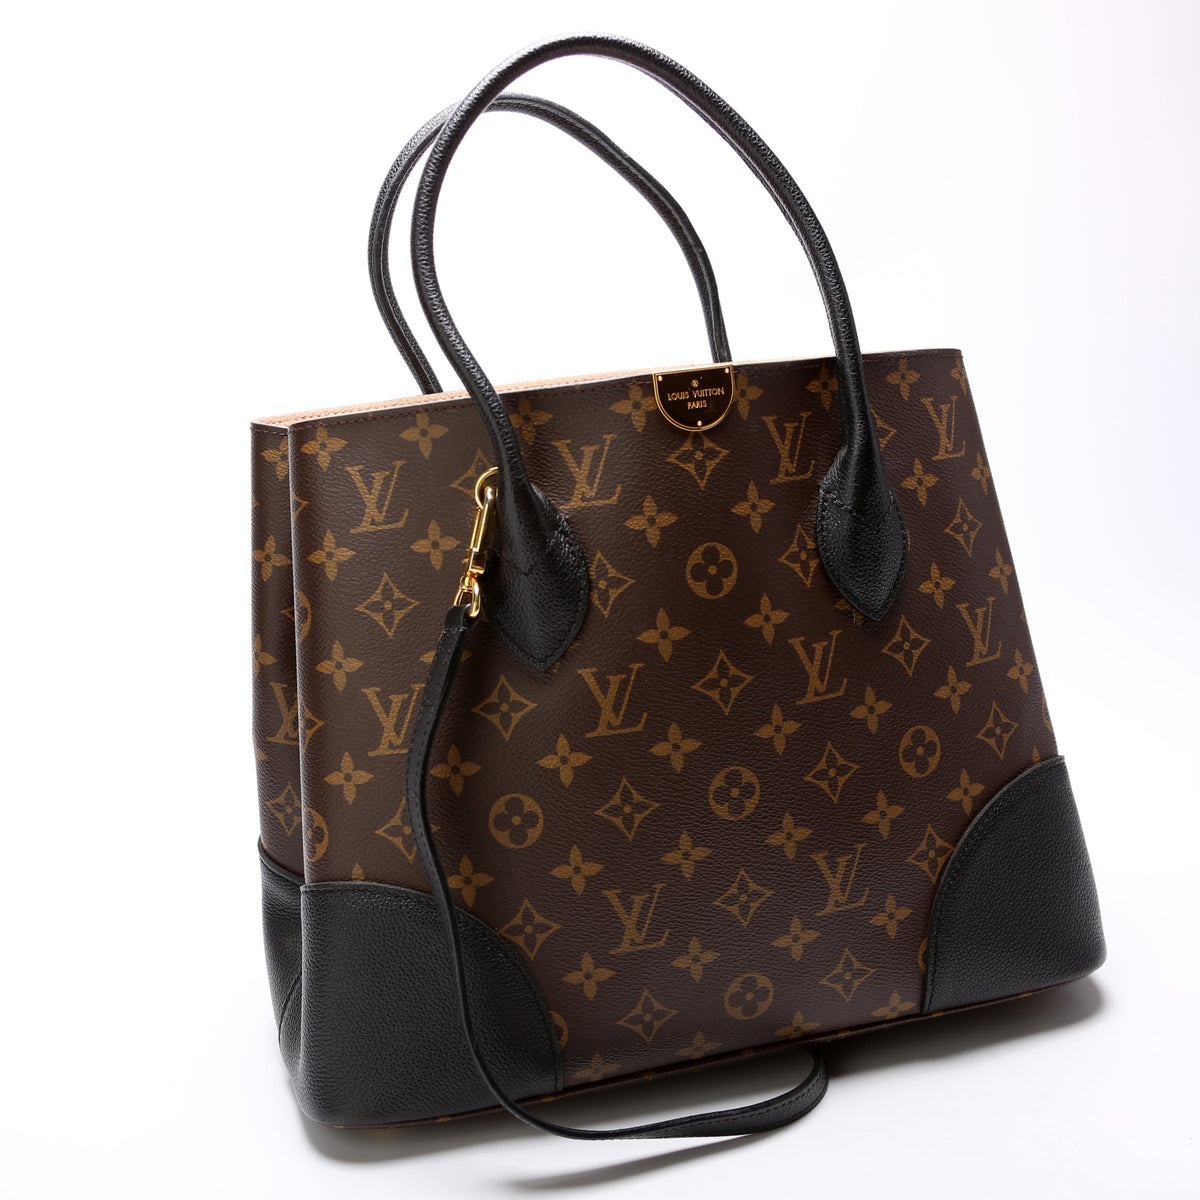 Louis Vuitton Flandrin Monogram Canvas Bag (Authentic) for Sale in